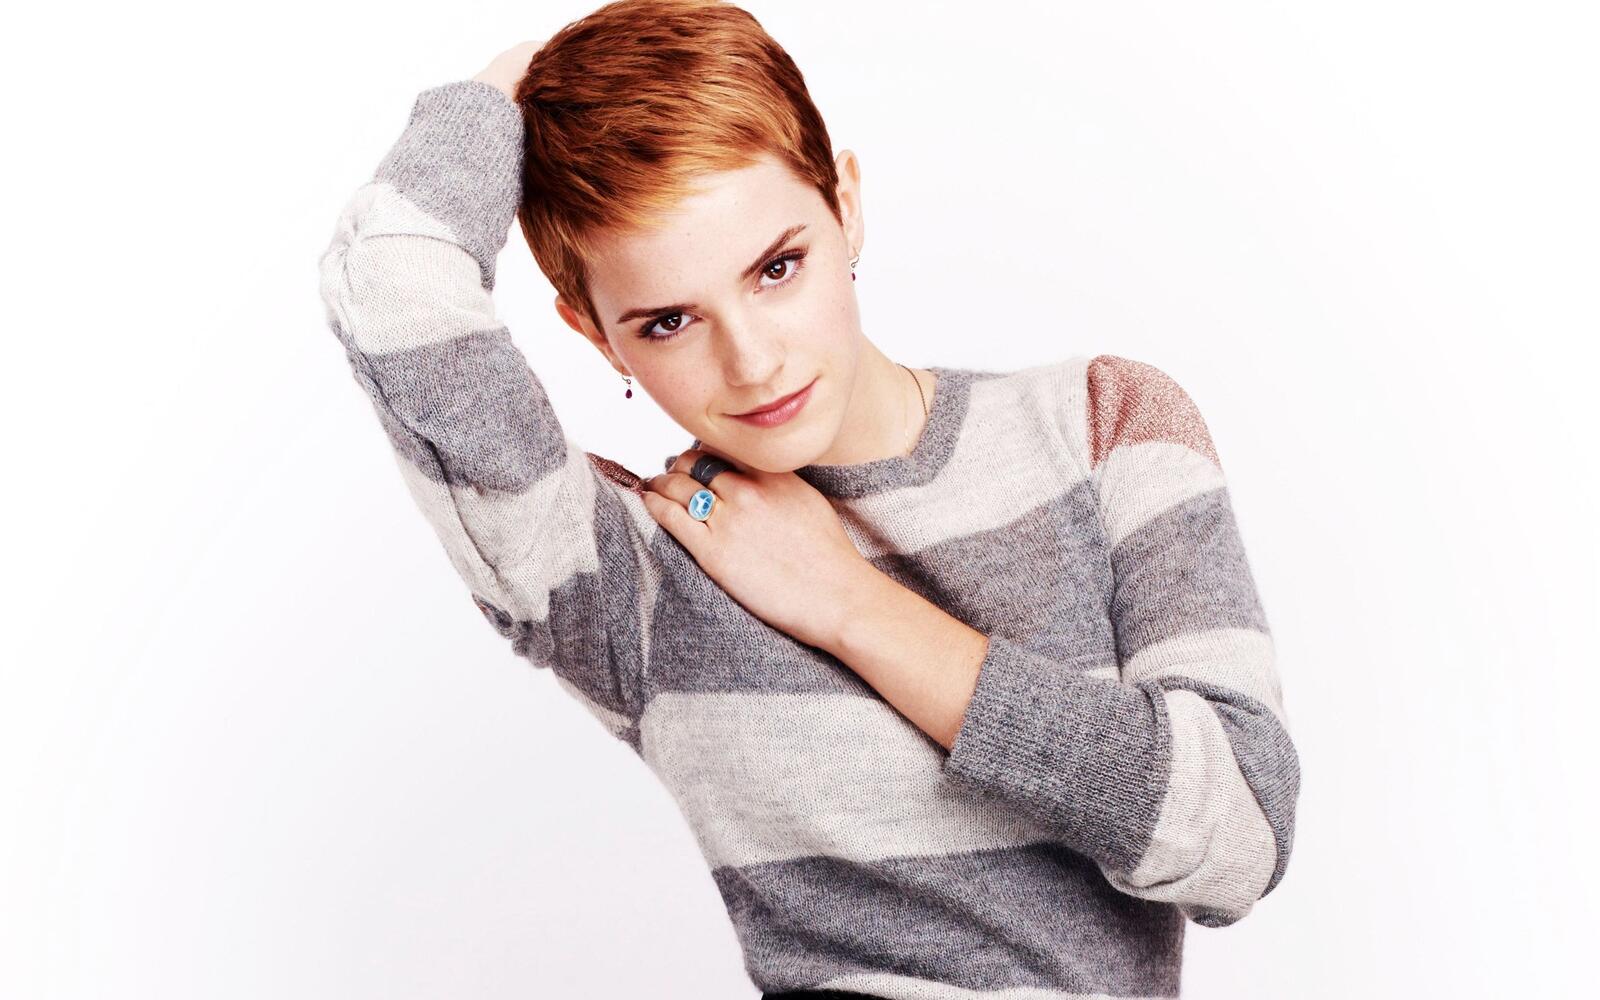 Wallpapers short hair Emma Watson celebrity on the desktop